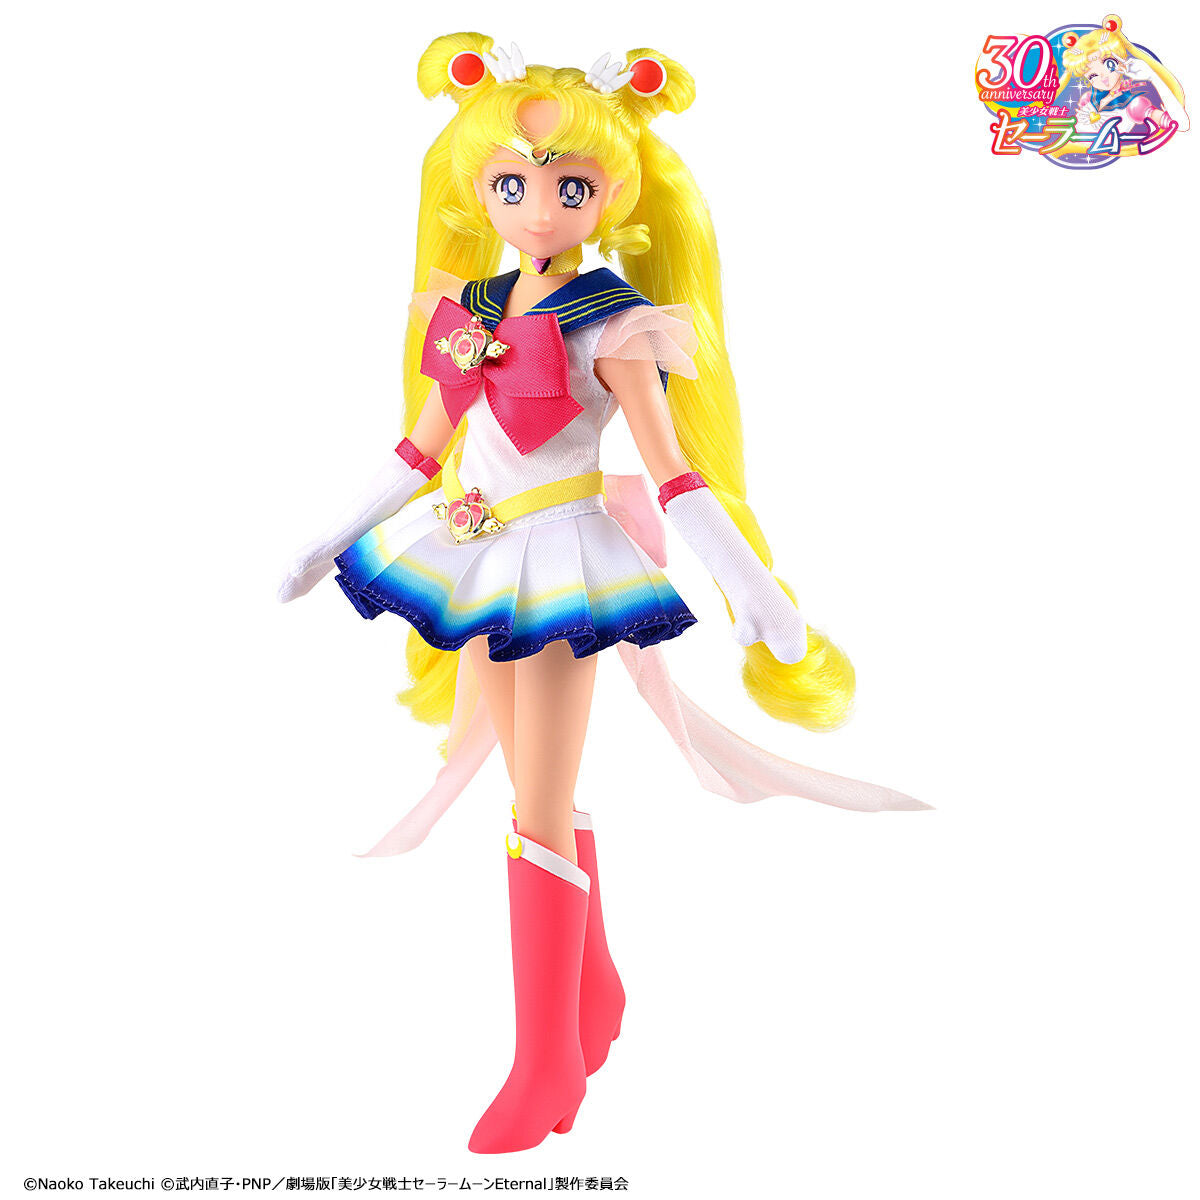 Super Sailor Moon Style Doll